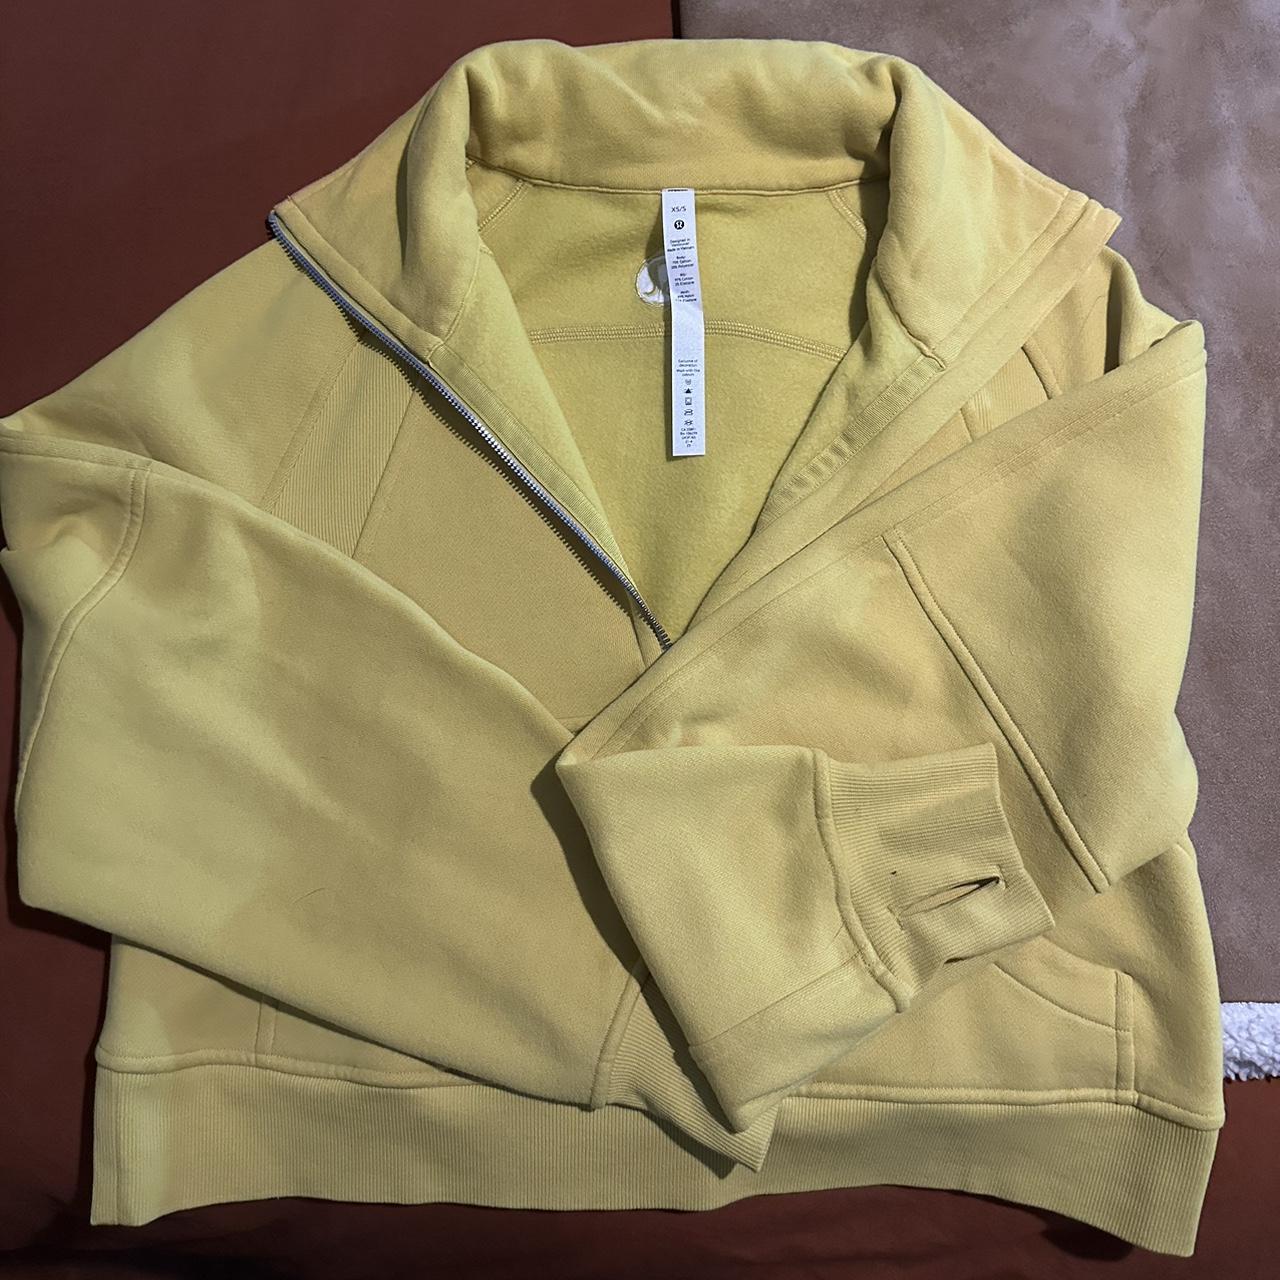 Lululemon Turquoise Half Zip Athletic Pullover Size - Depop